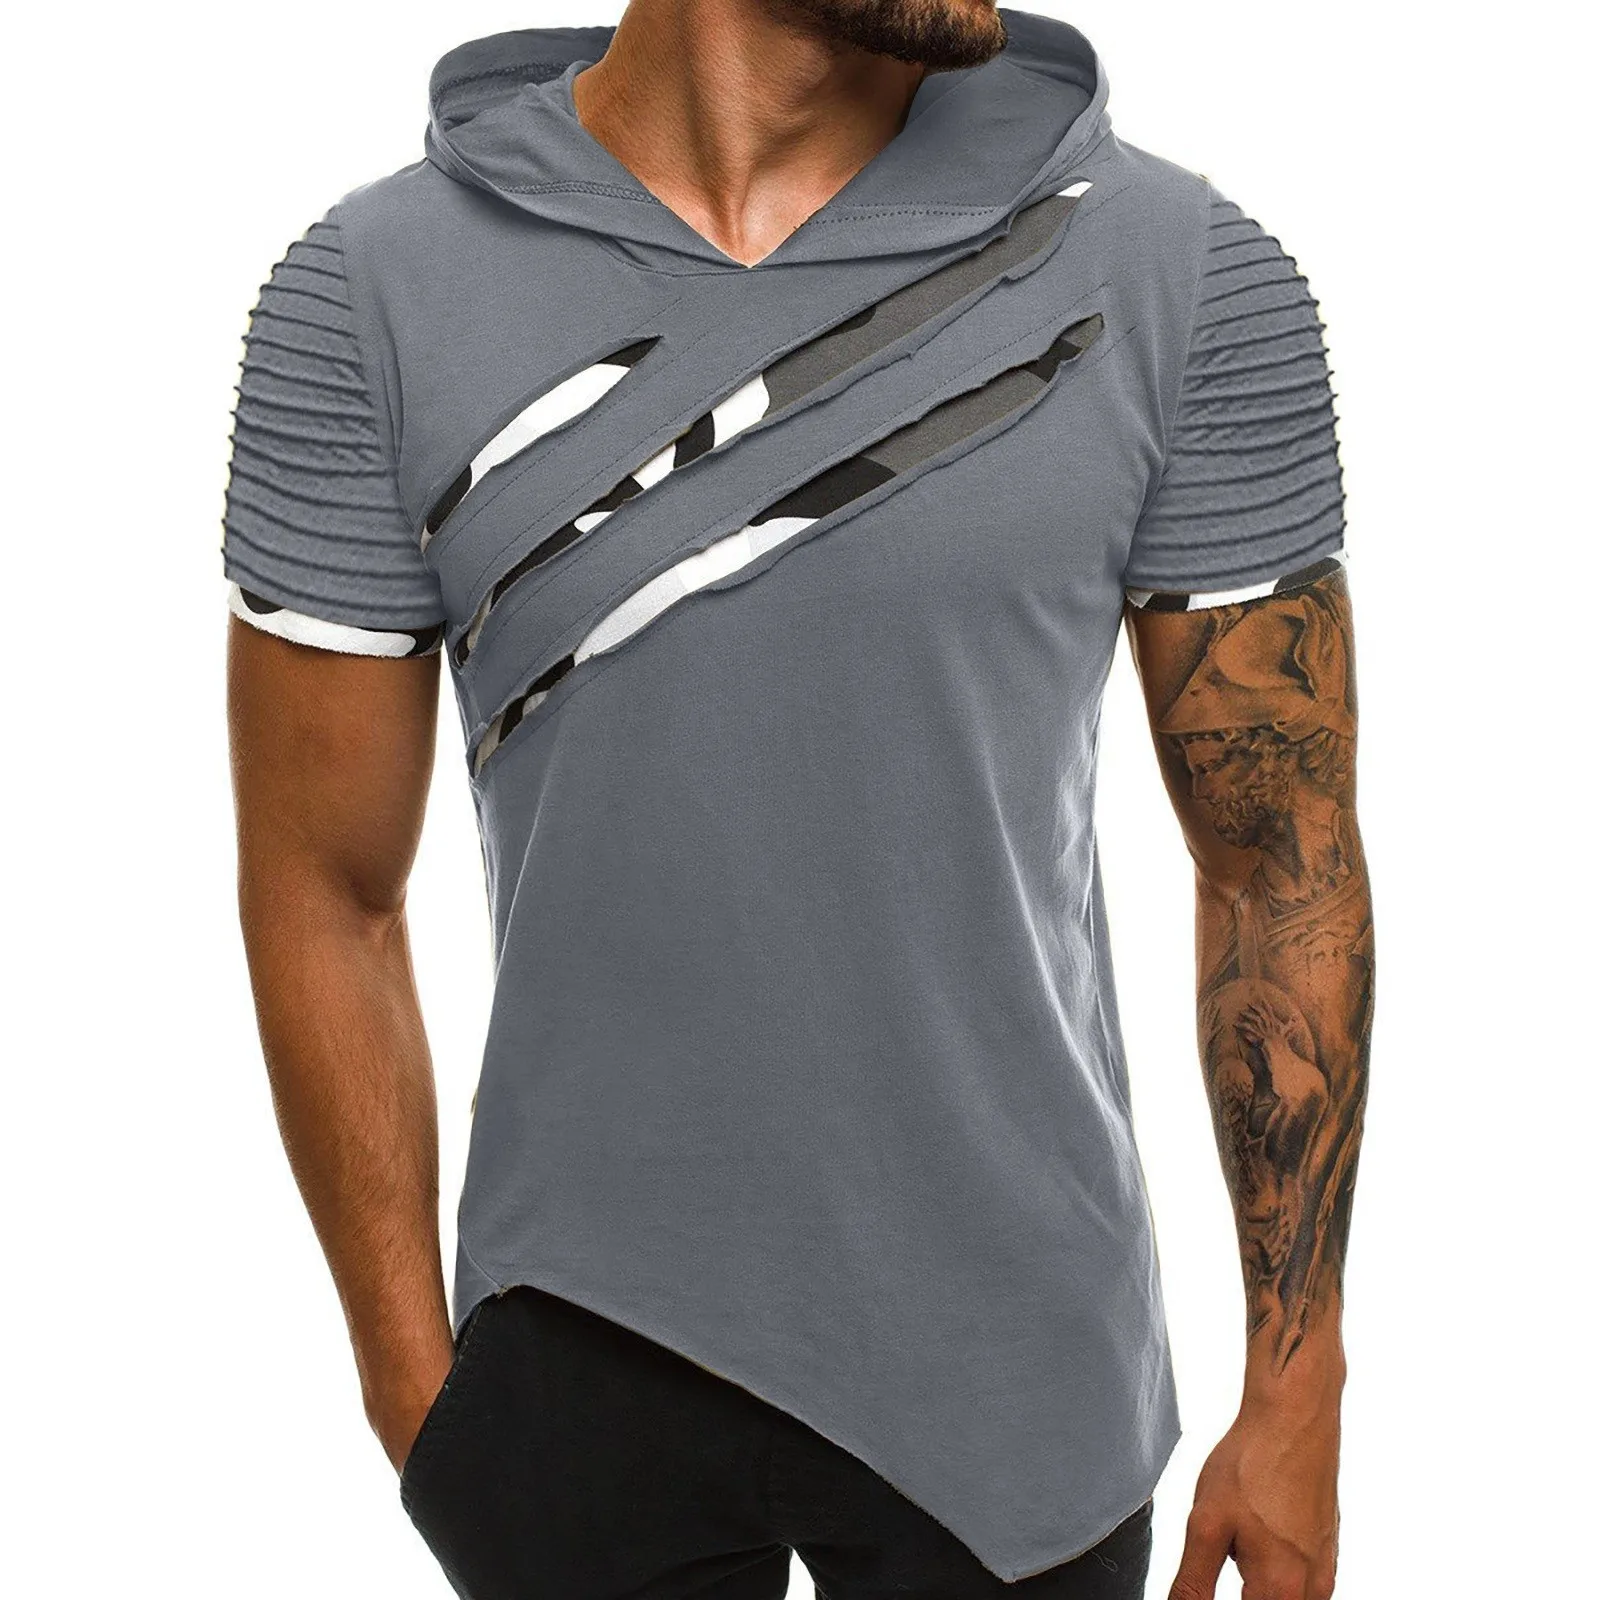 

Men's Tank Top Sleeveless Muscle Shirt Workout Sports Fitness Hoodie Vests Sweatshirt for Men No Hood